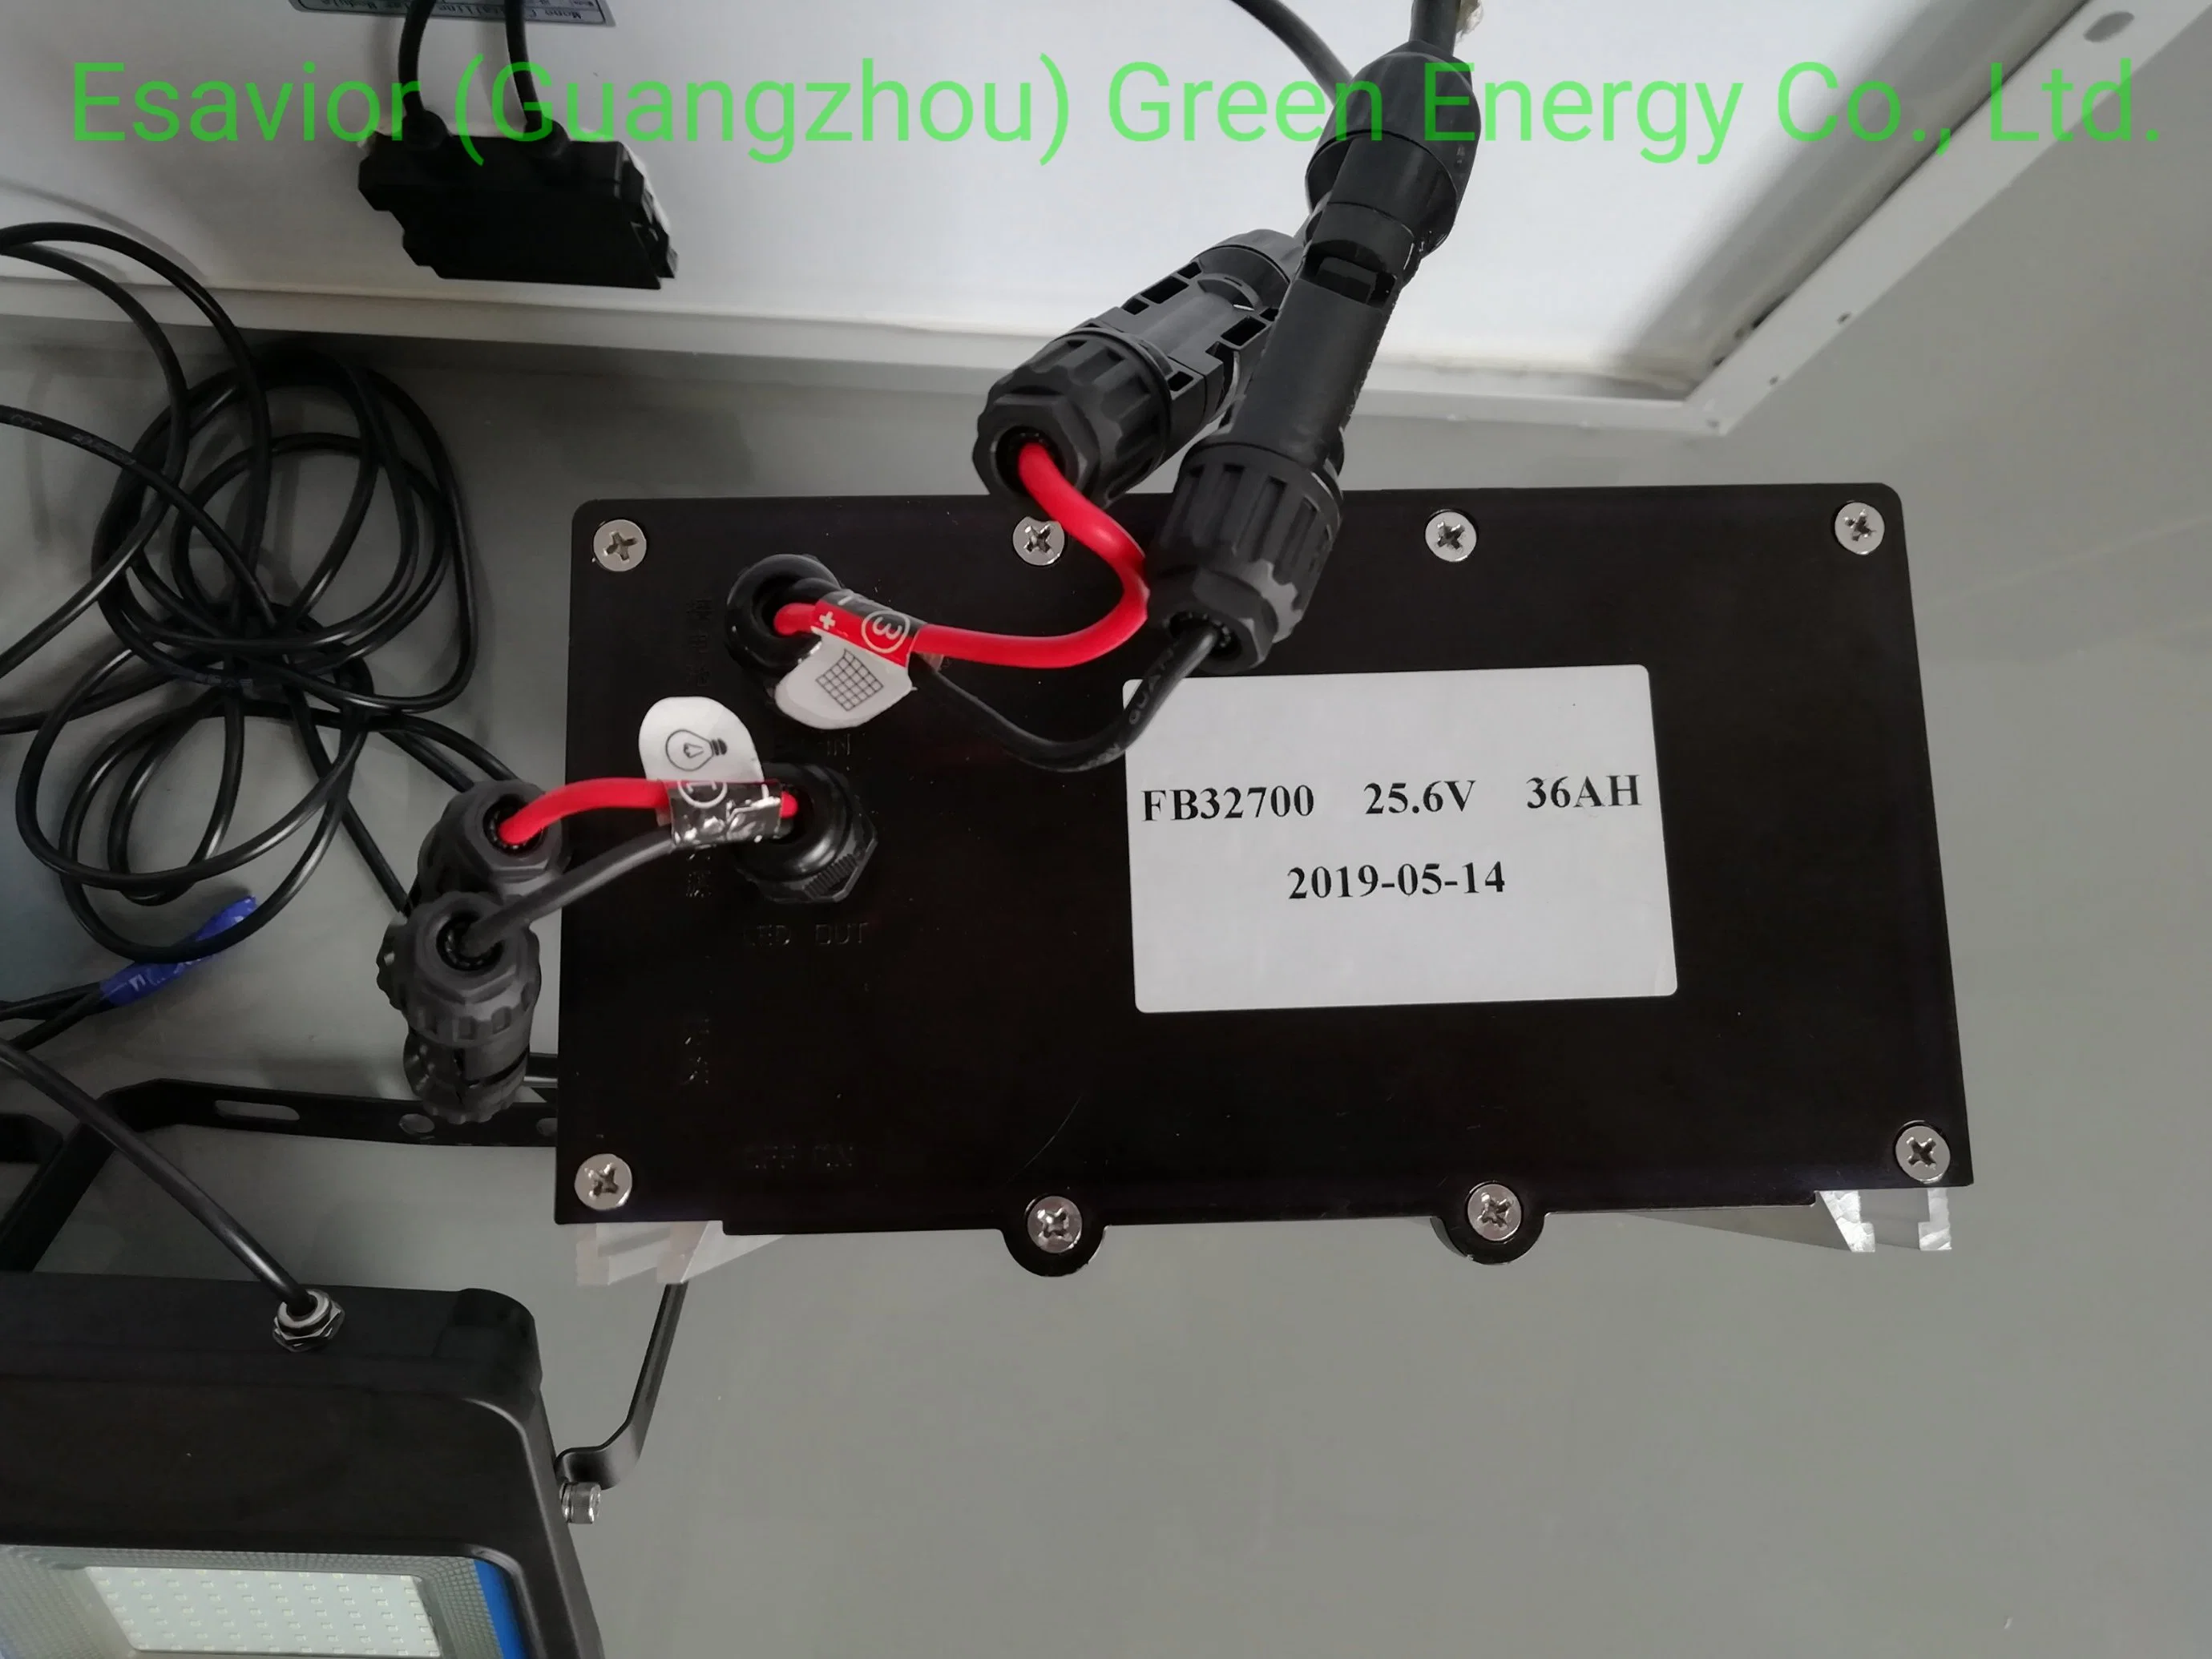 Esavior 100W Solar Flood Light Street Lighting Lamp with LiFePO4 Lithium Battery Microwave Sensor